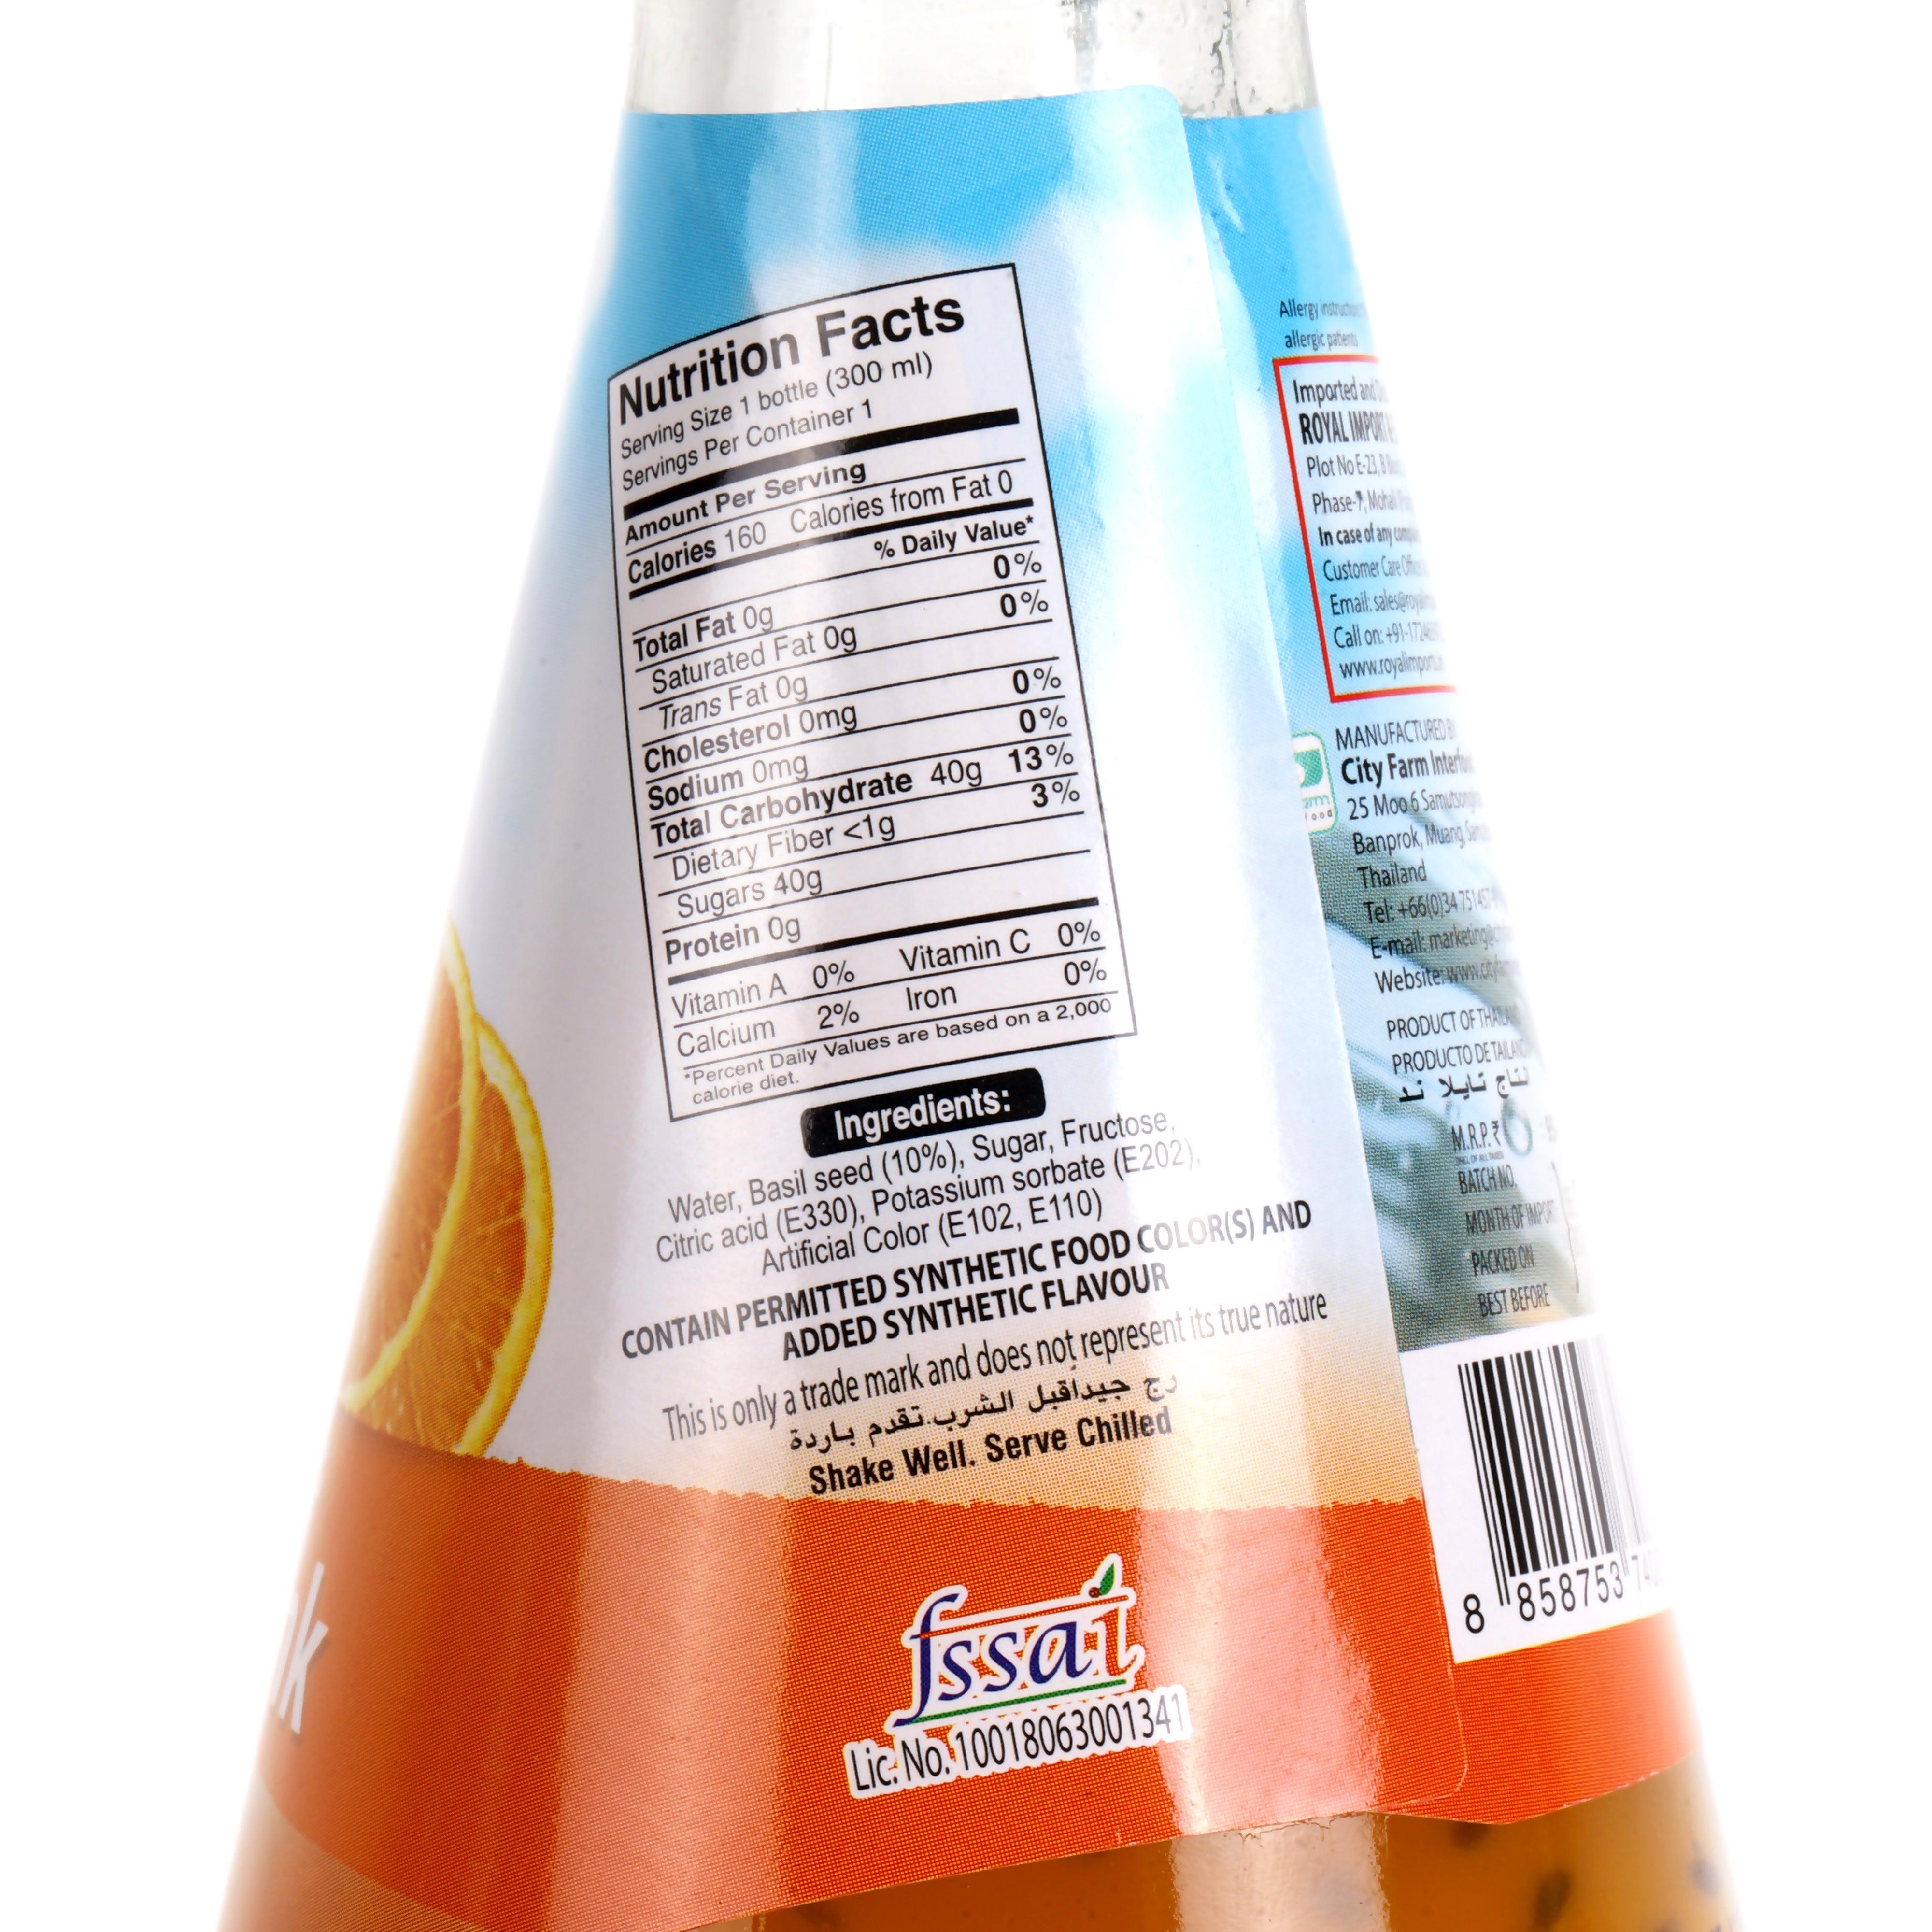 City Fresh Orange Flavoured Basil Seed Drink, 300ml - Remkart